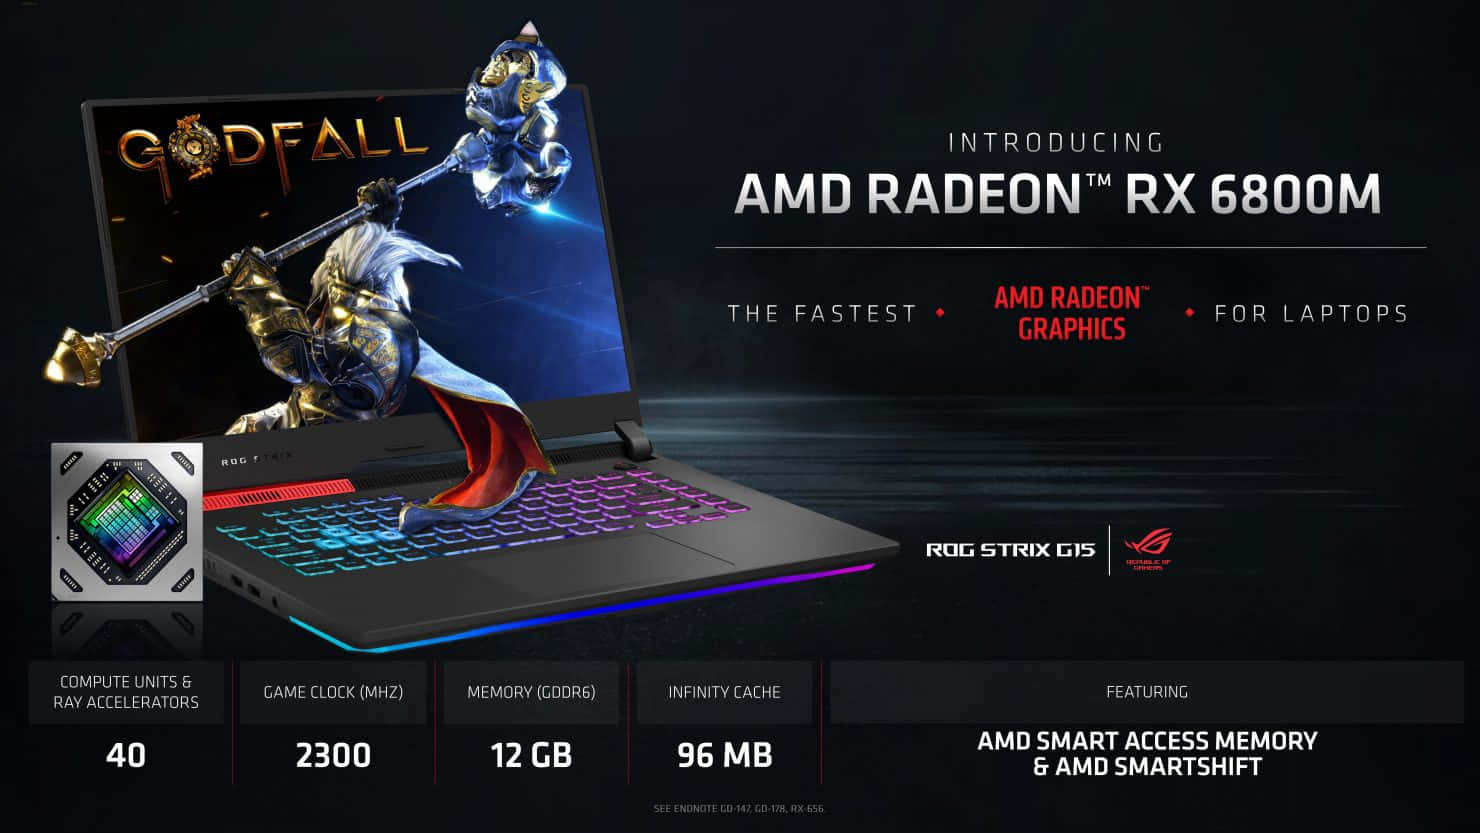 Amd Radeon Rx 570 - Rx570m